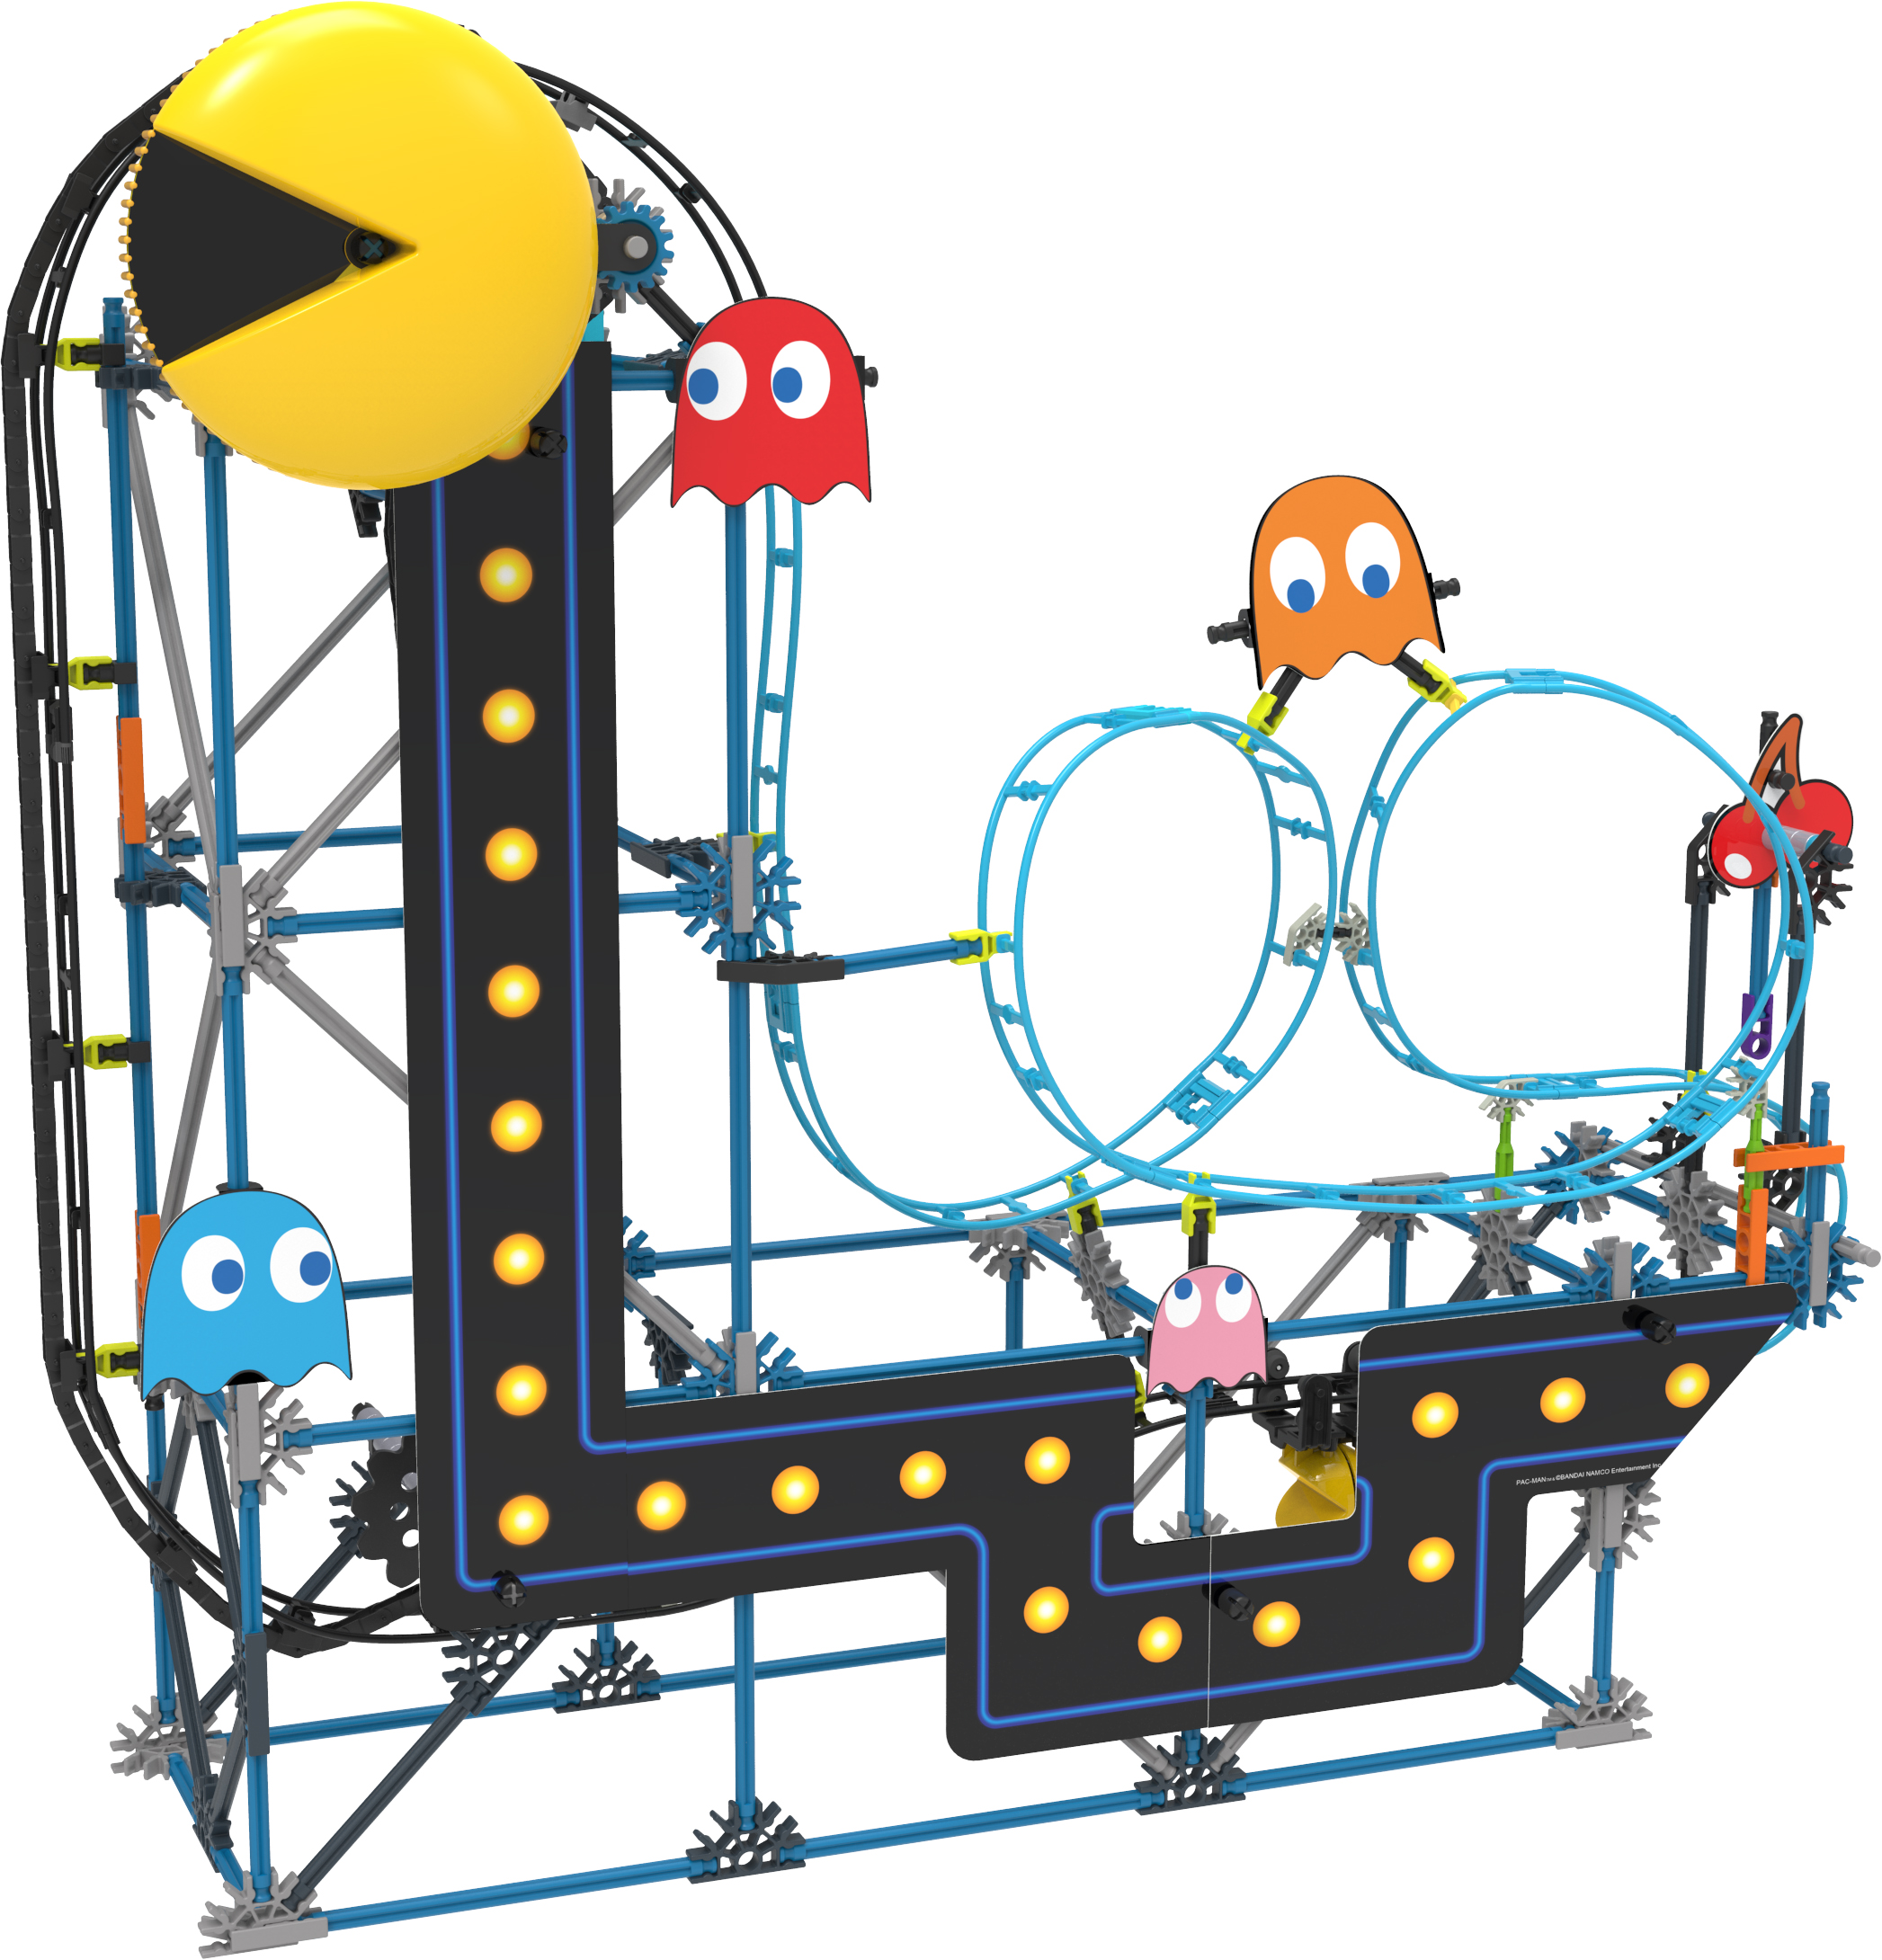 K'NEX PAC-MAN Roller Coaster Building Set - 432 Parts - Roller Coaster Building Toy - image 1 of 6